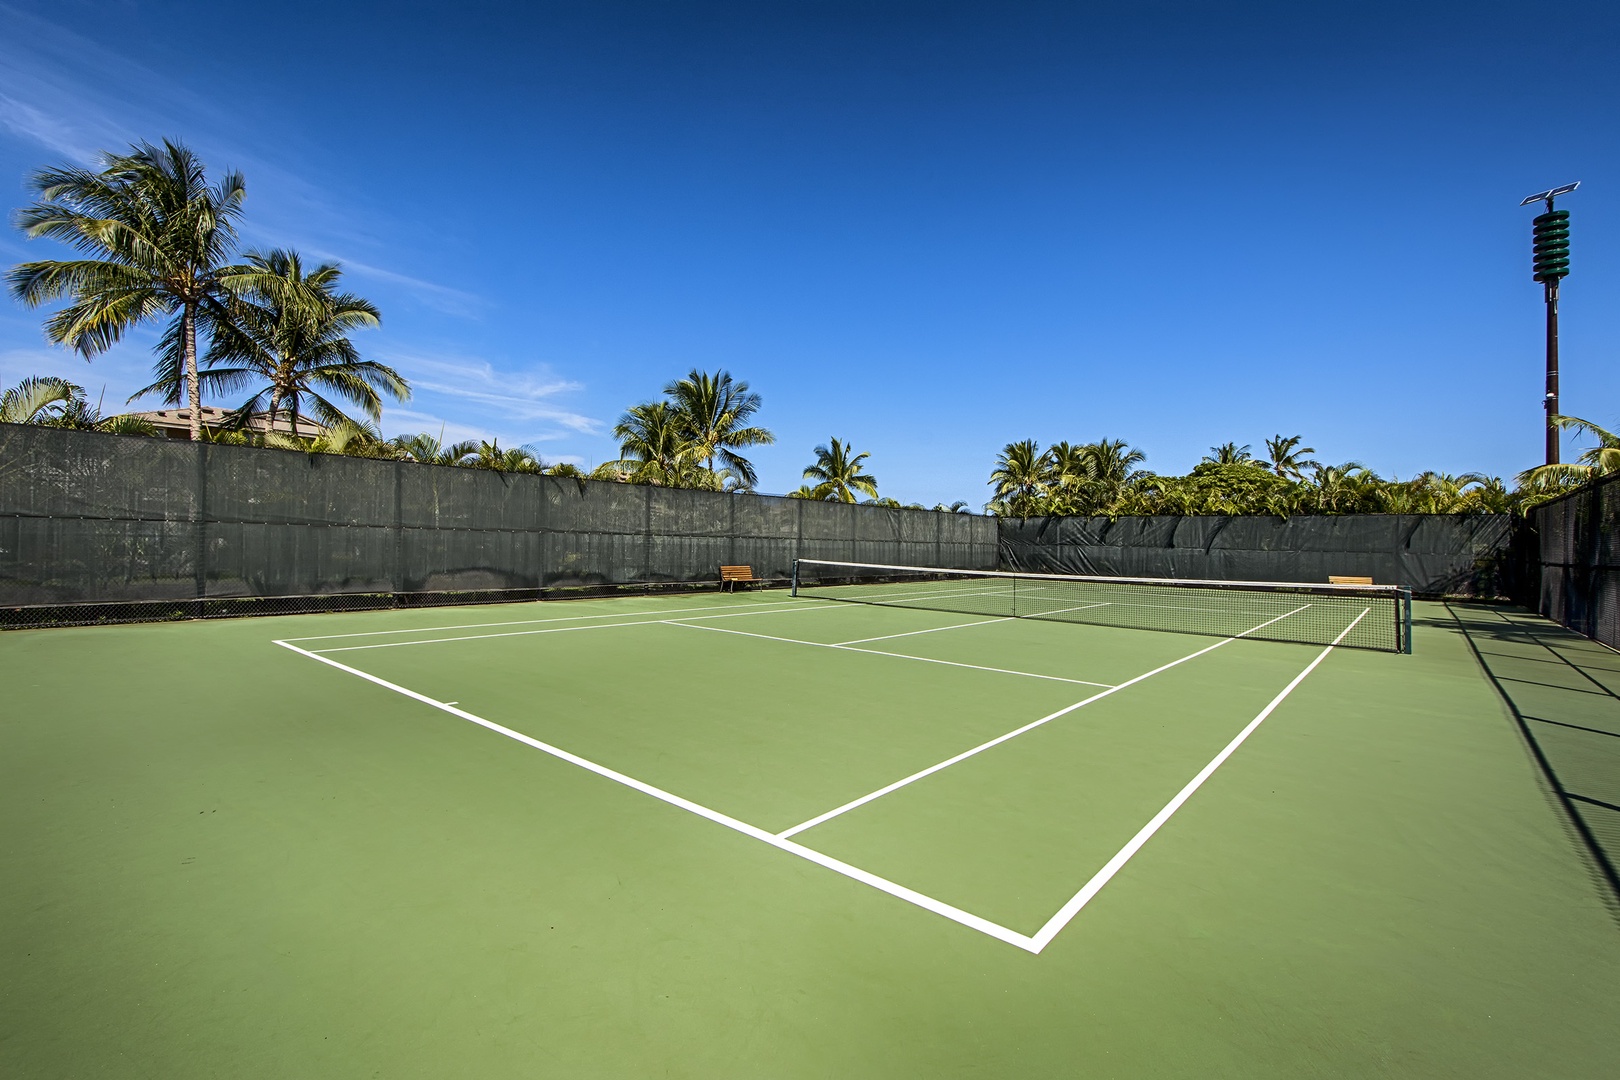 Waikoloa Vacation Rentals, Hali'i Kai at Waikoloa Beach Resort 9F - Hali'i Kai tennis courts.